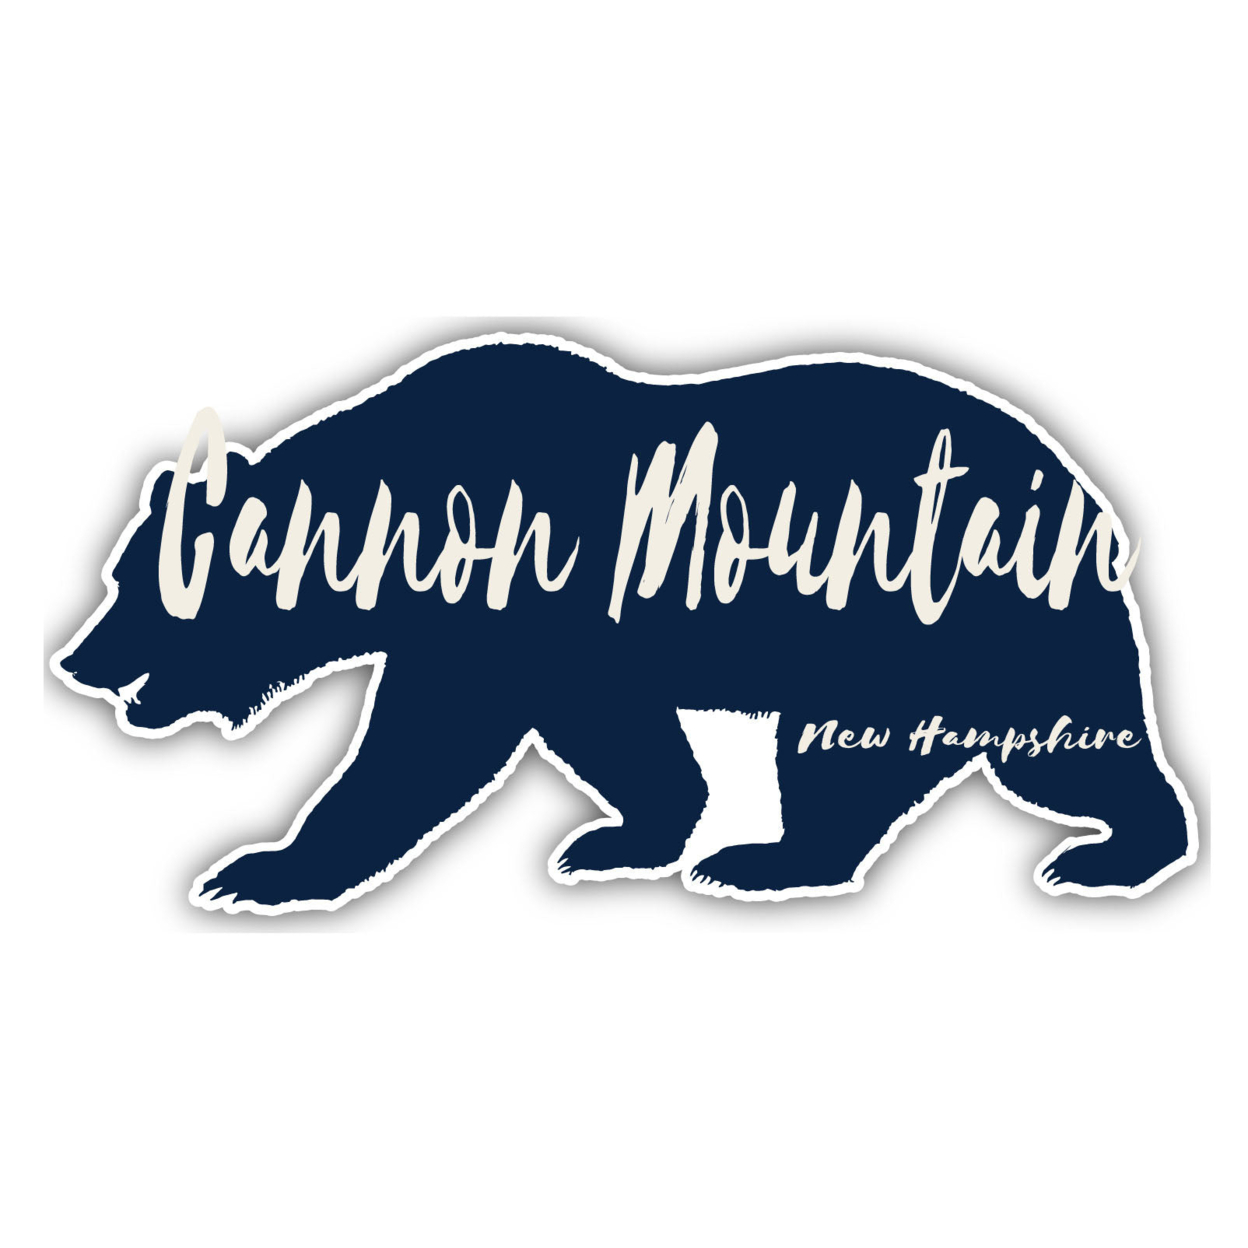 Cannon Mountain New Hampshire Souvenir Decorative Stickers (Choose Theme And Size) - Single Unit, 12-Inch, Bear